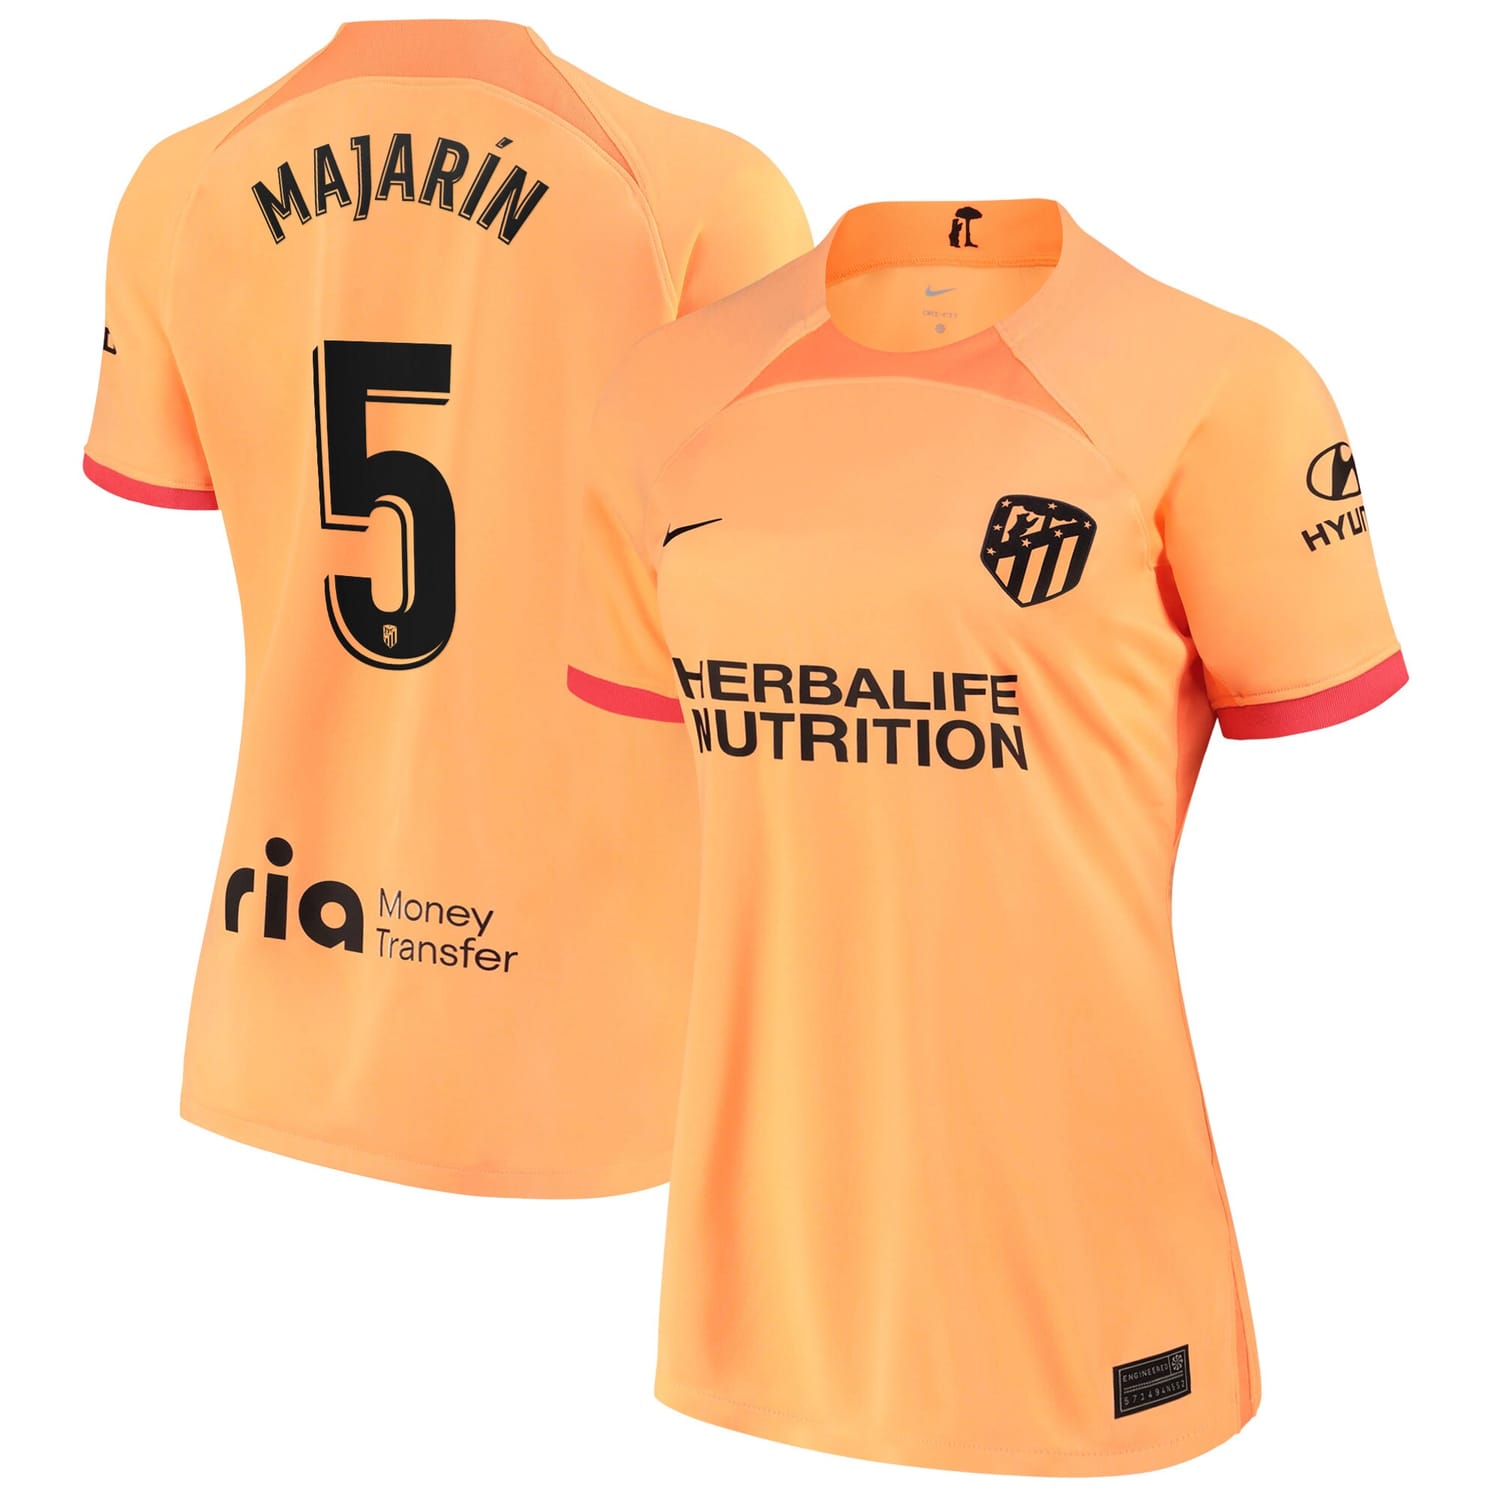 La Liga Atletico de Madrid Third Jersey Shirt 2022-23 player Sonia García Majarín 5 printing for Women